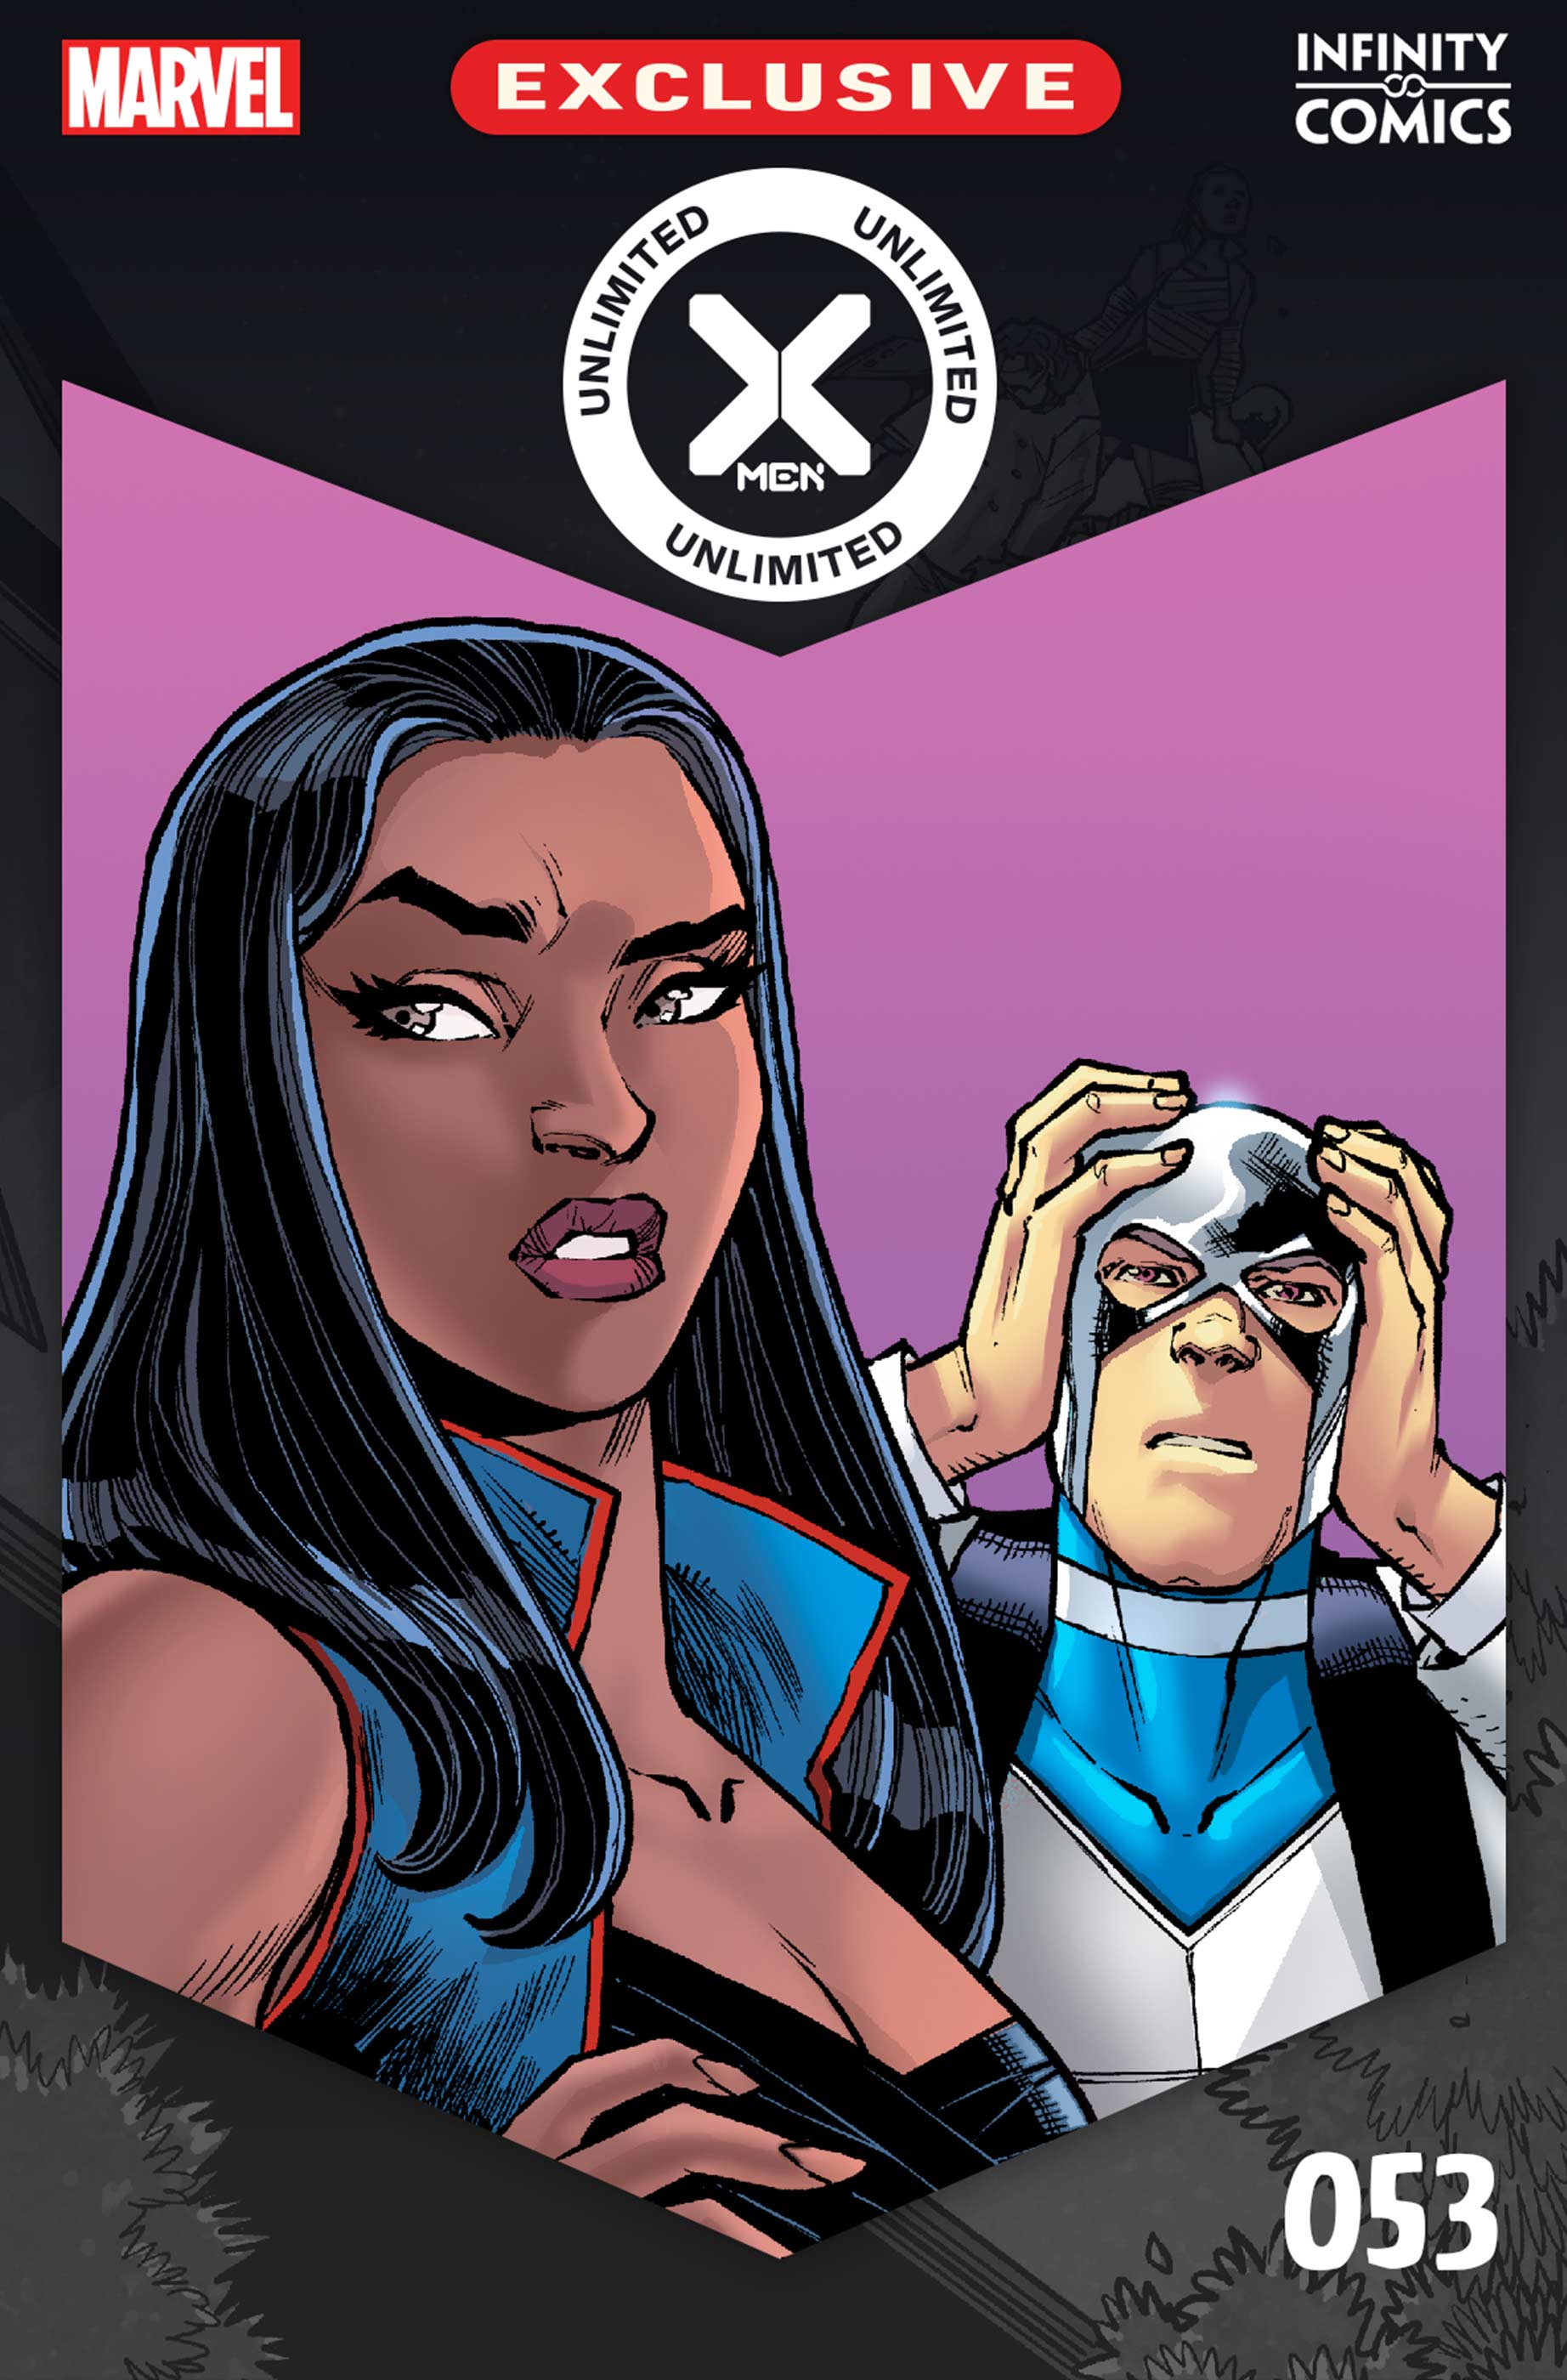 X-Men Unlimited Infinity Comic (2021) #53